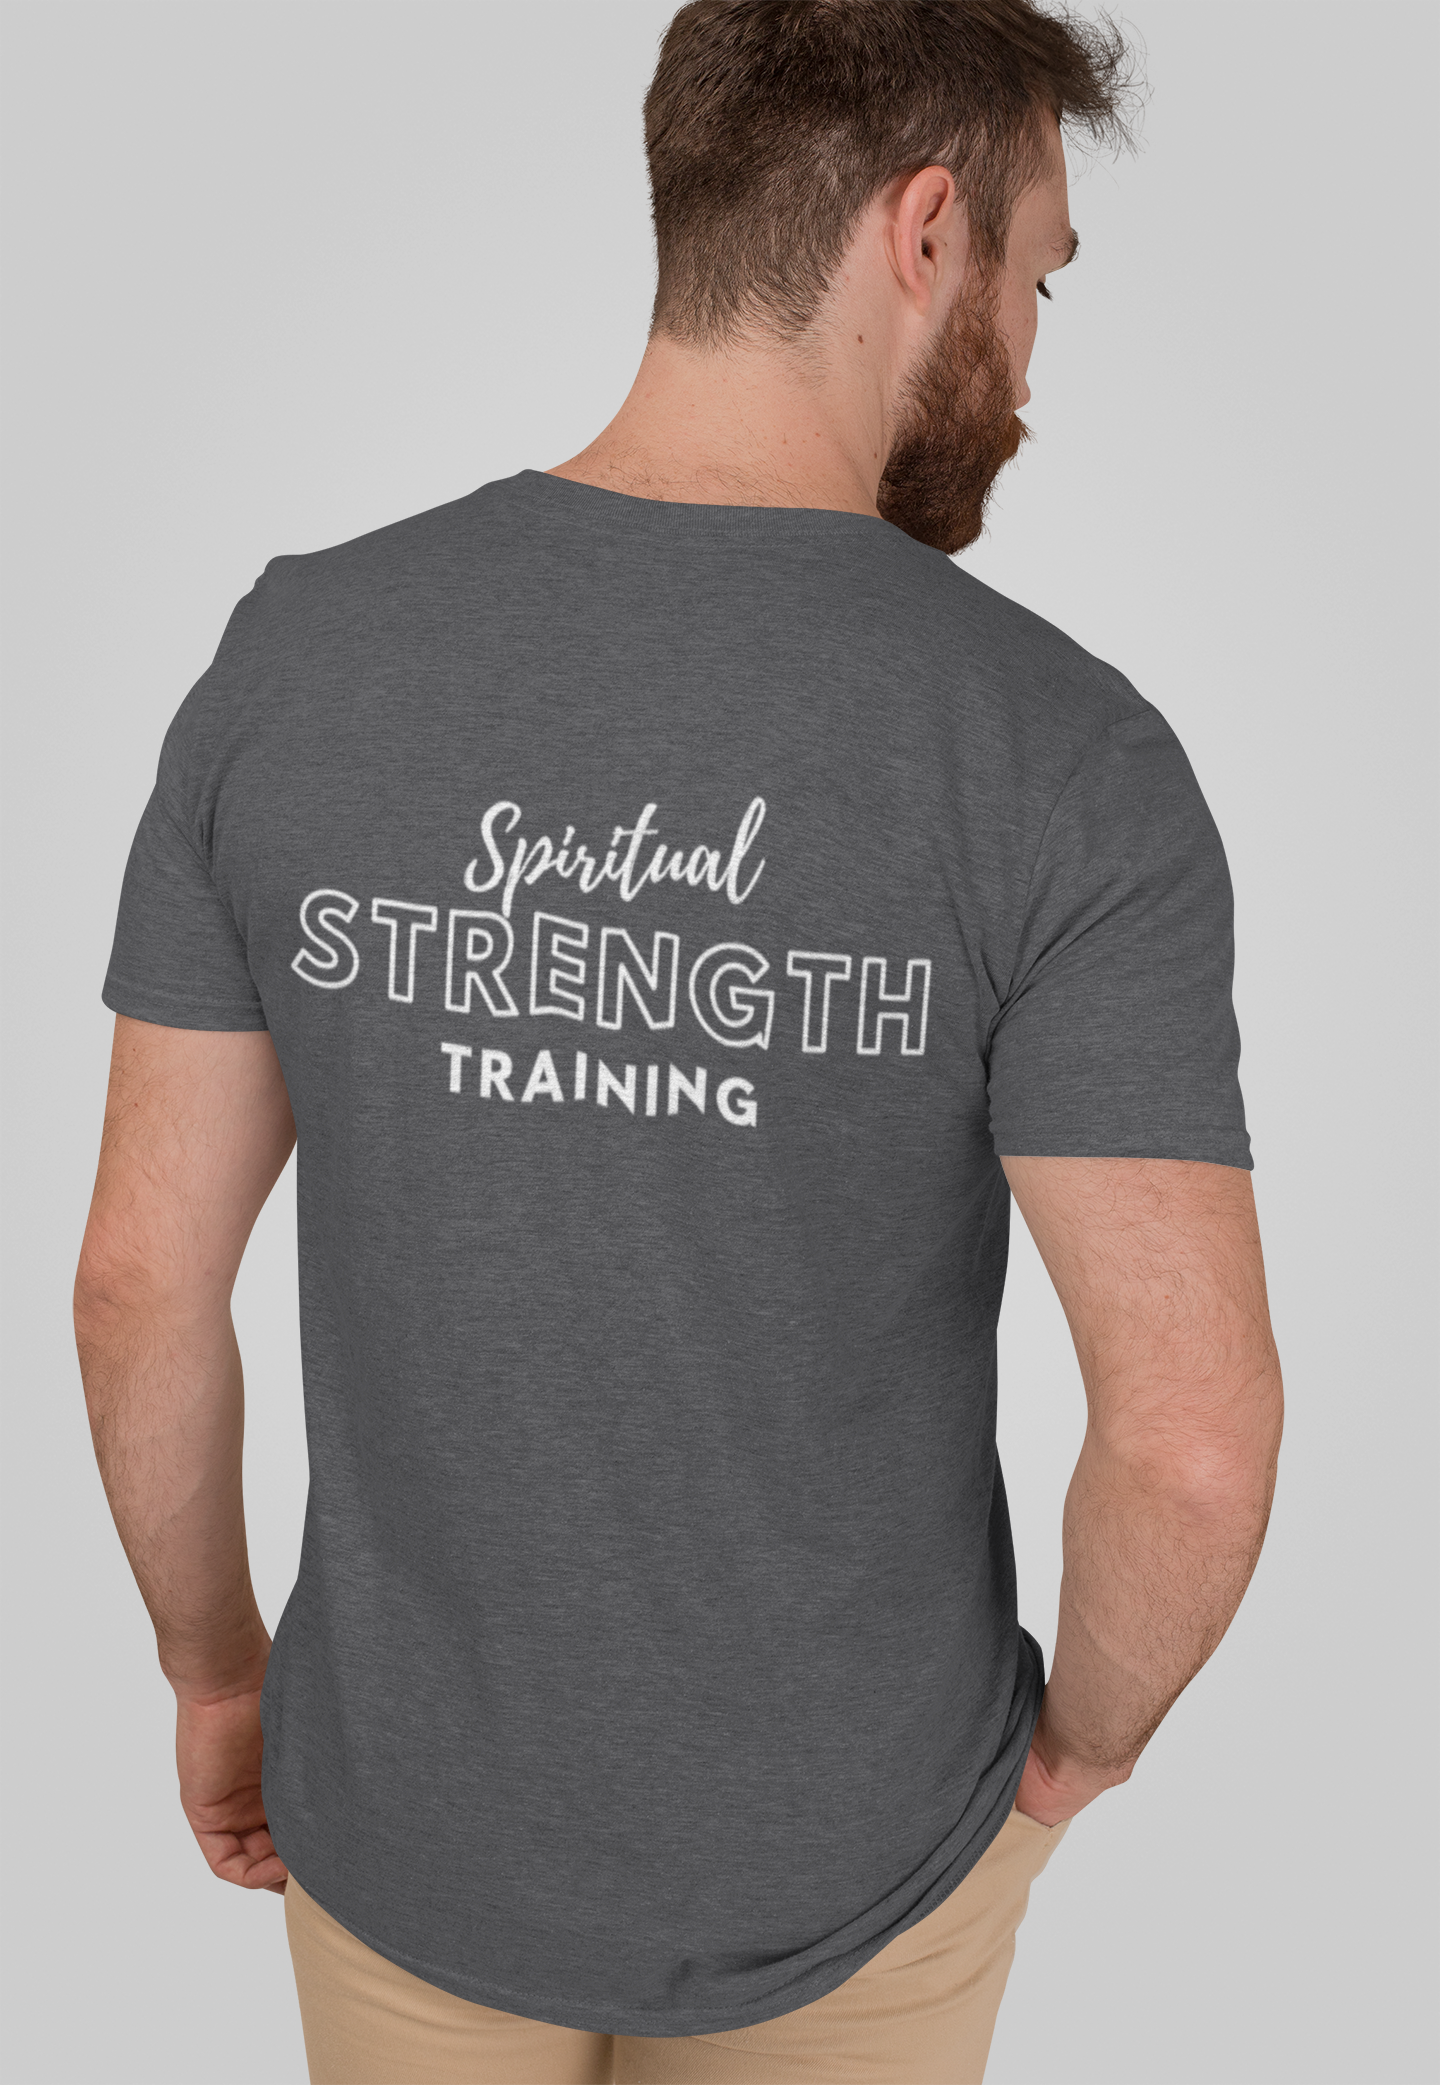 Spiritual Strength Training